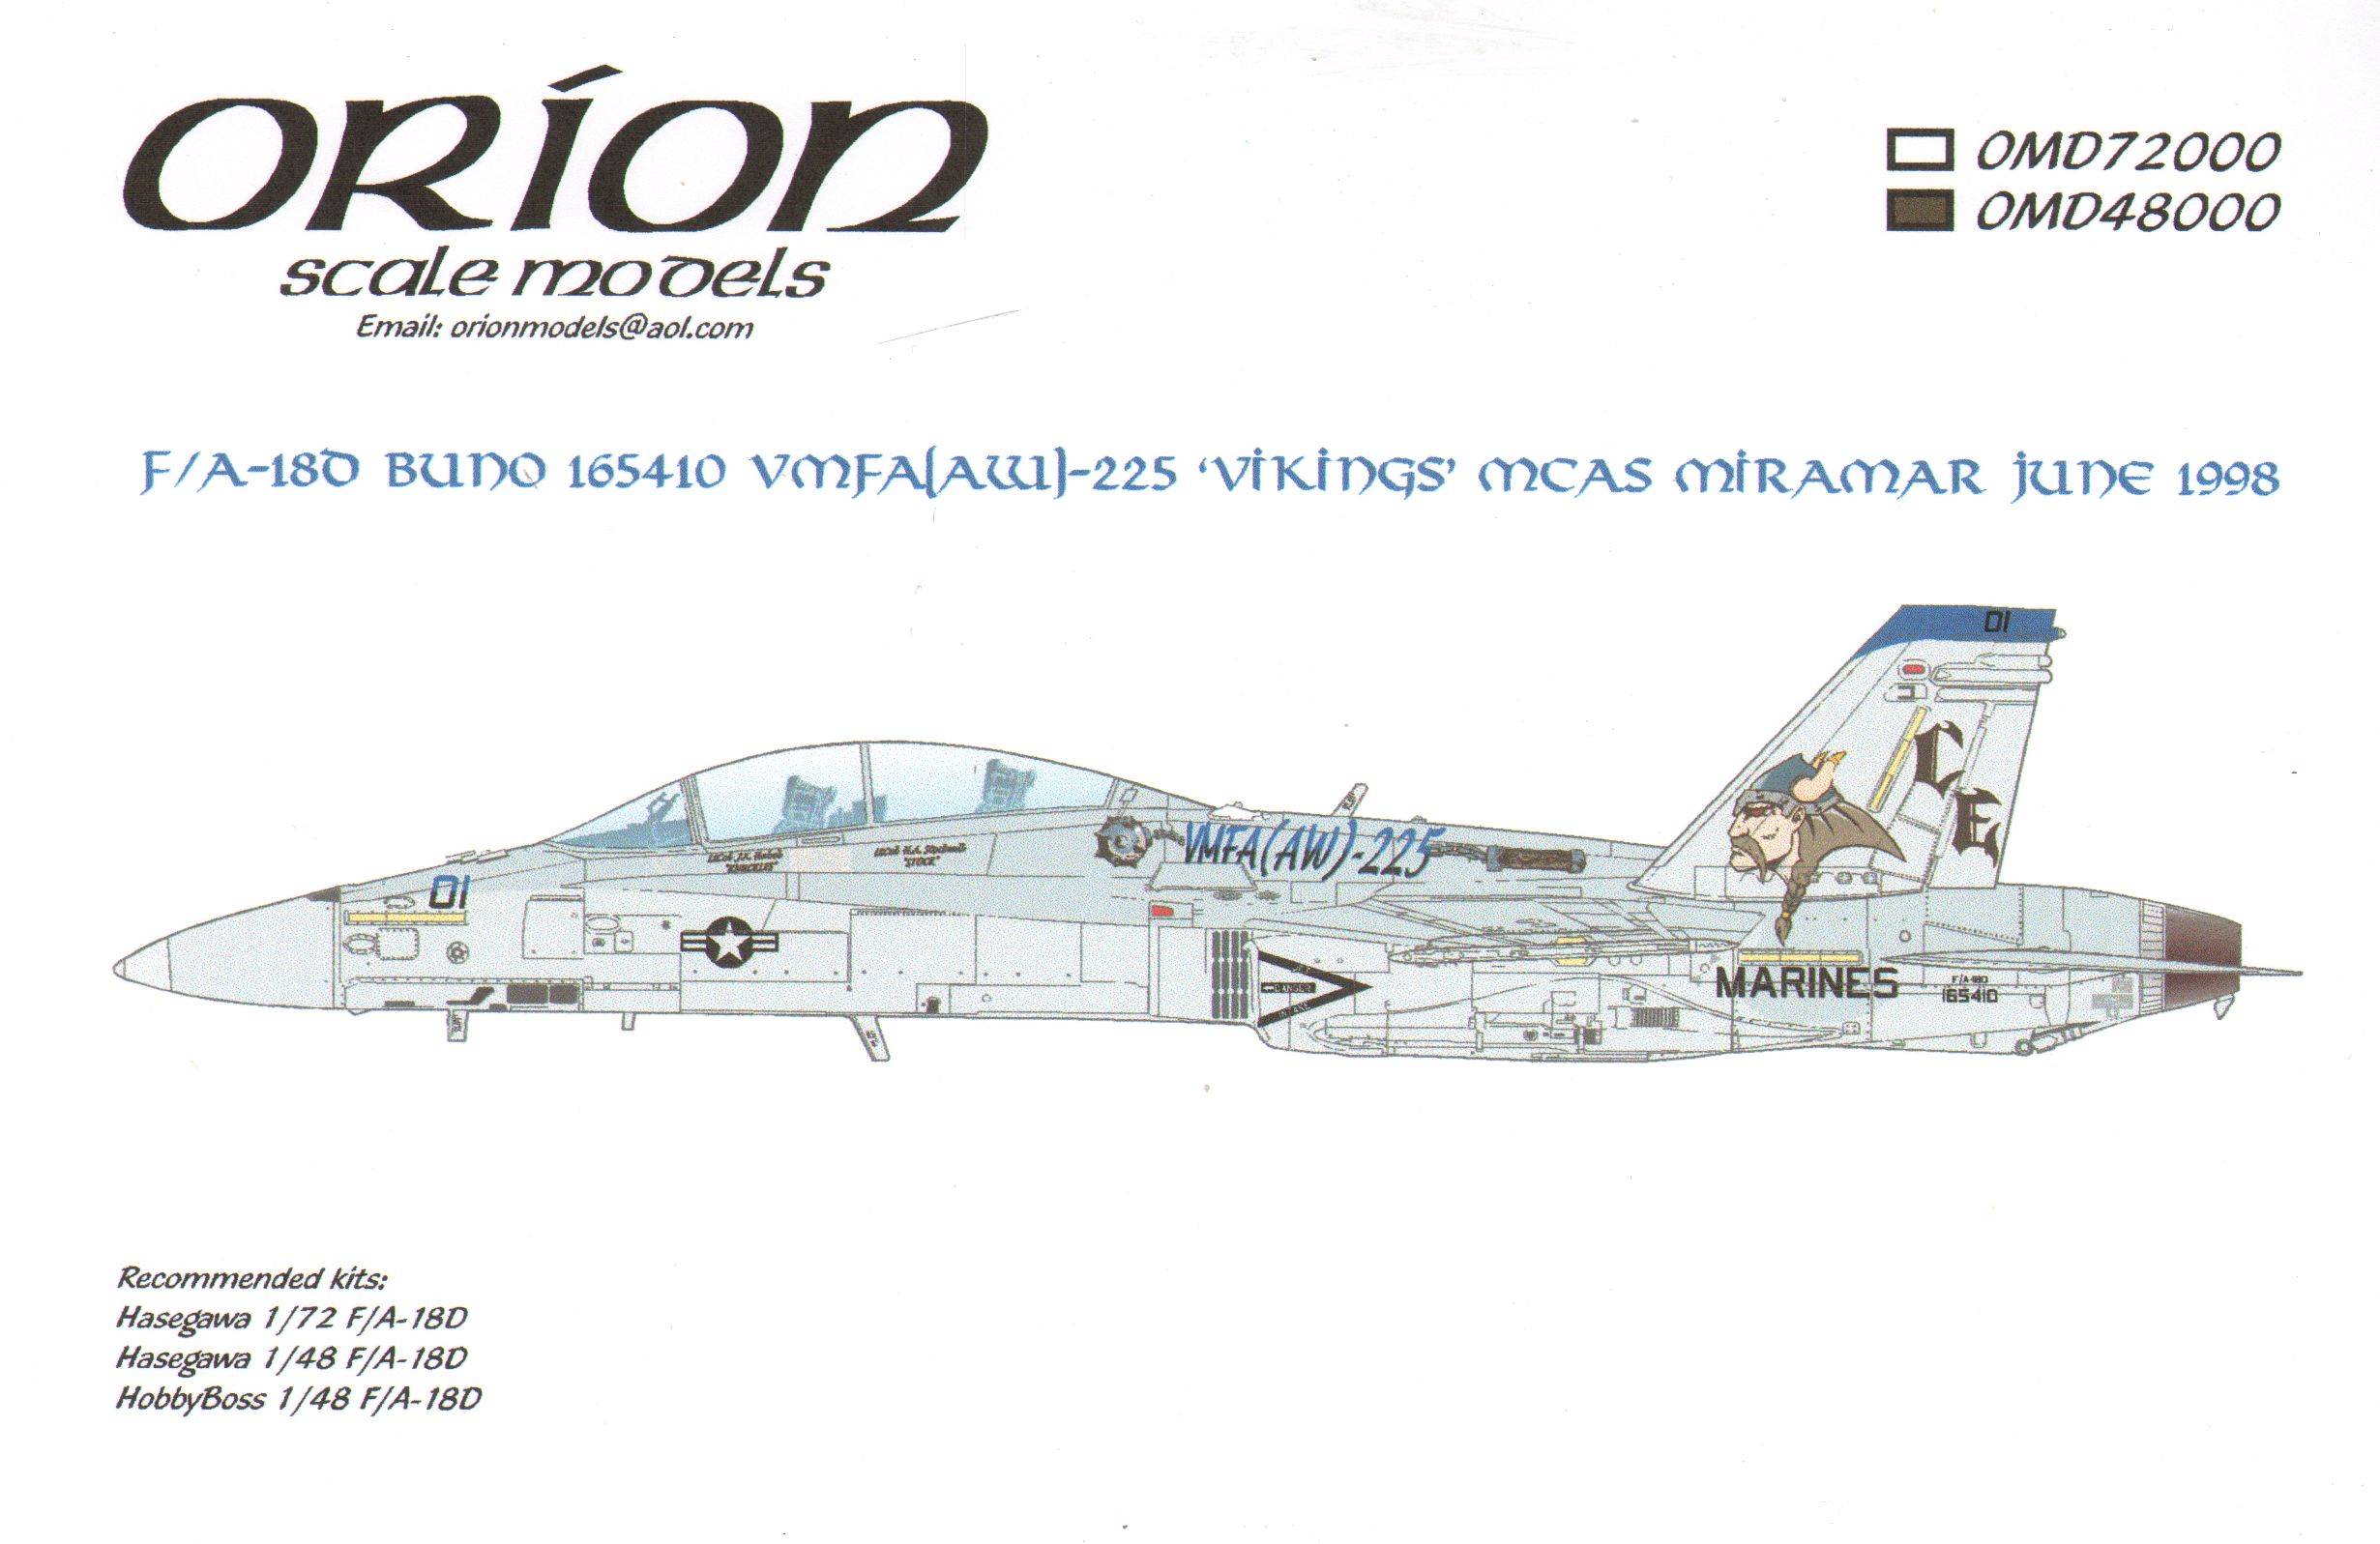 Accessoires - Décal F / A-18D Buno 165410 VMFA (AW) -255 Vikings MCAS 